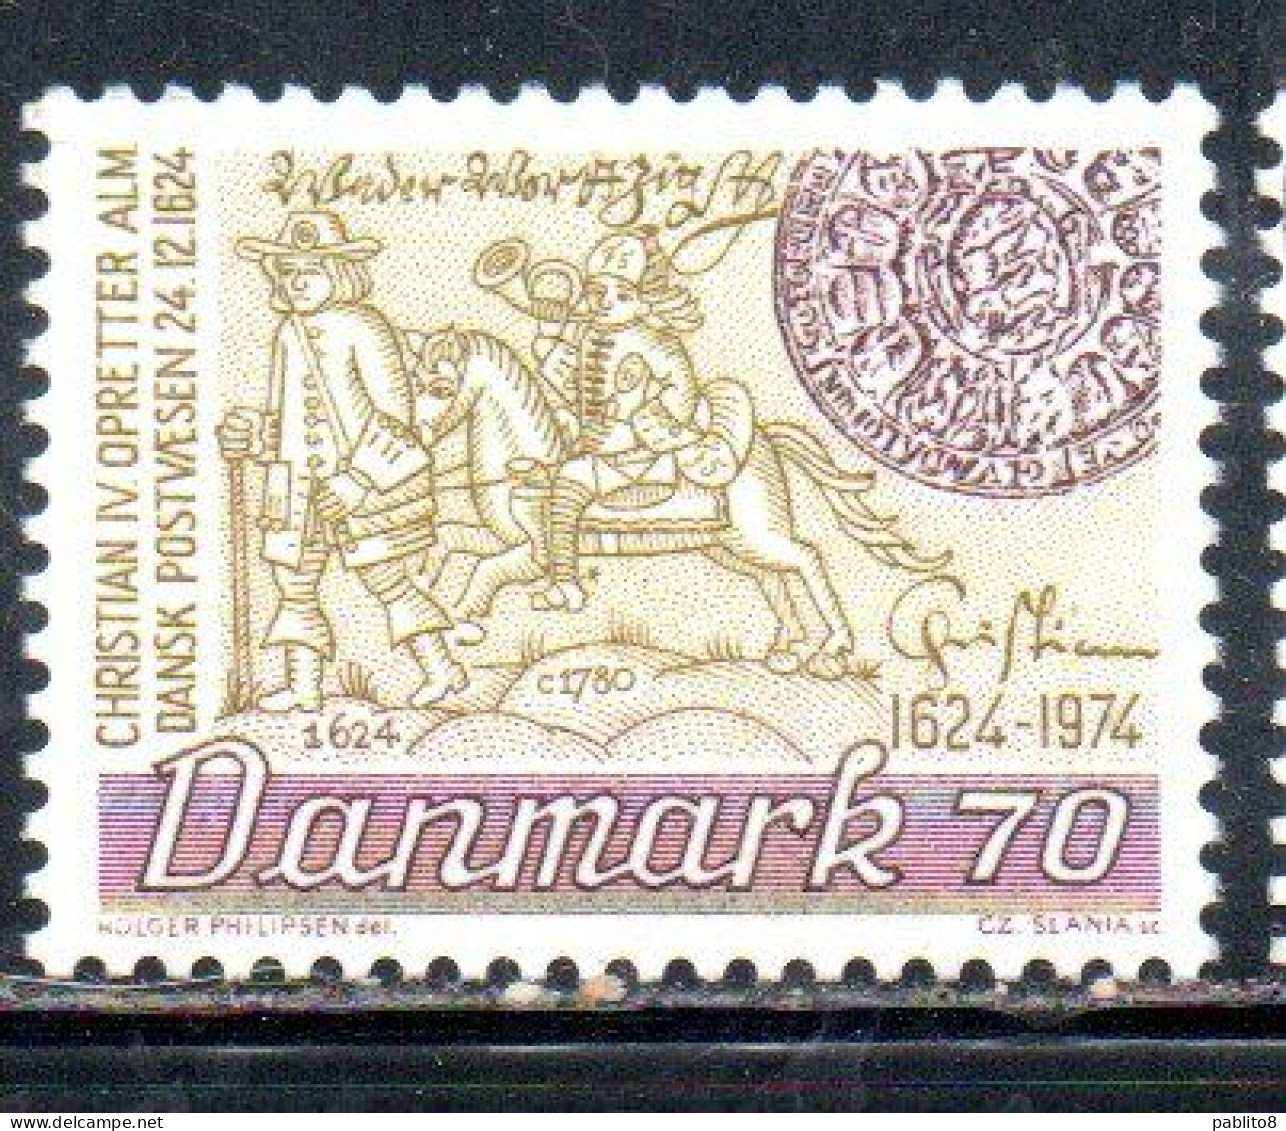 DANEMARK DANMARK DENMARK DANIMARCA 1974 DANISH PO POSTAL OFFICE MAILMAN POSTILION 70o MNH - Nuovi